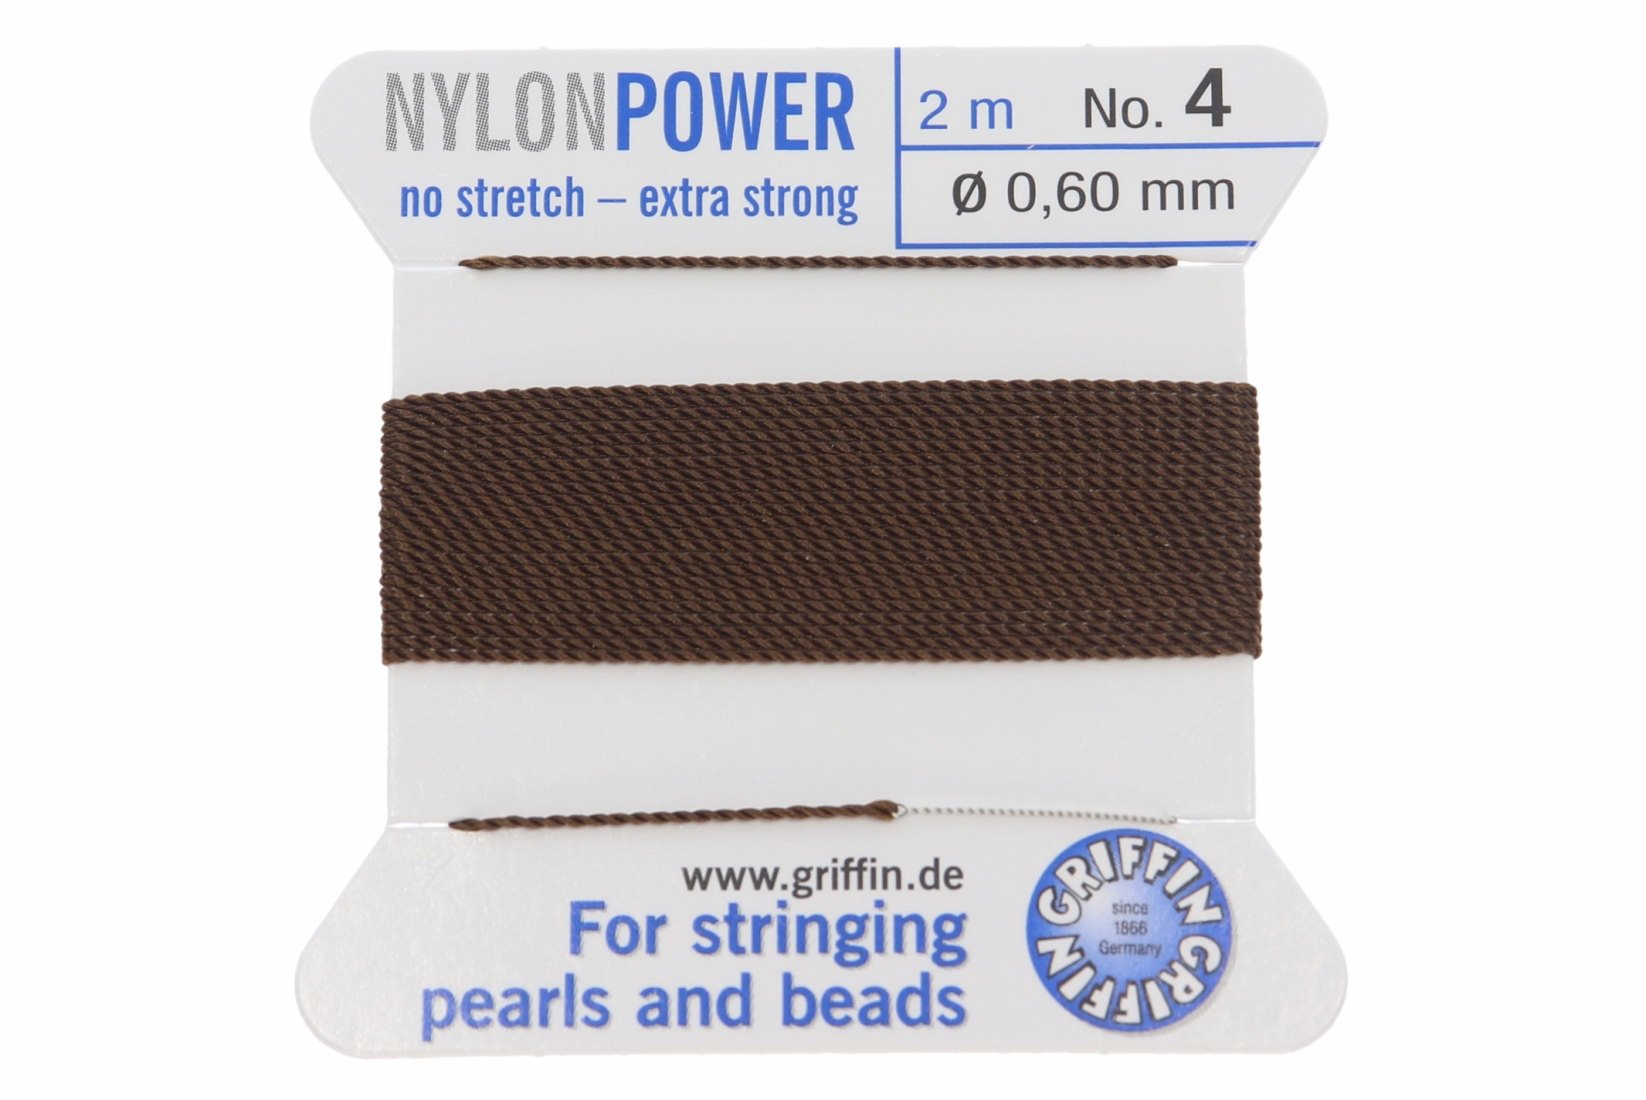 Perlseide braun - Nylon Power strong 200cm verschiedene Stärken